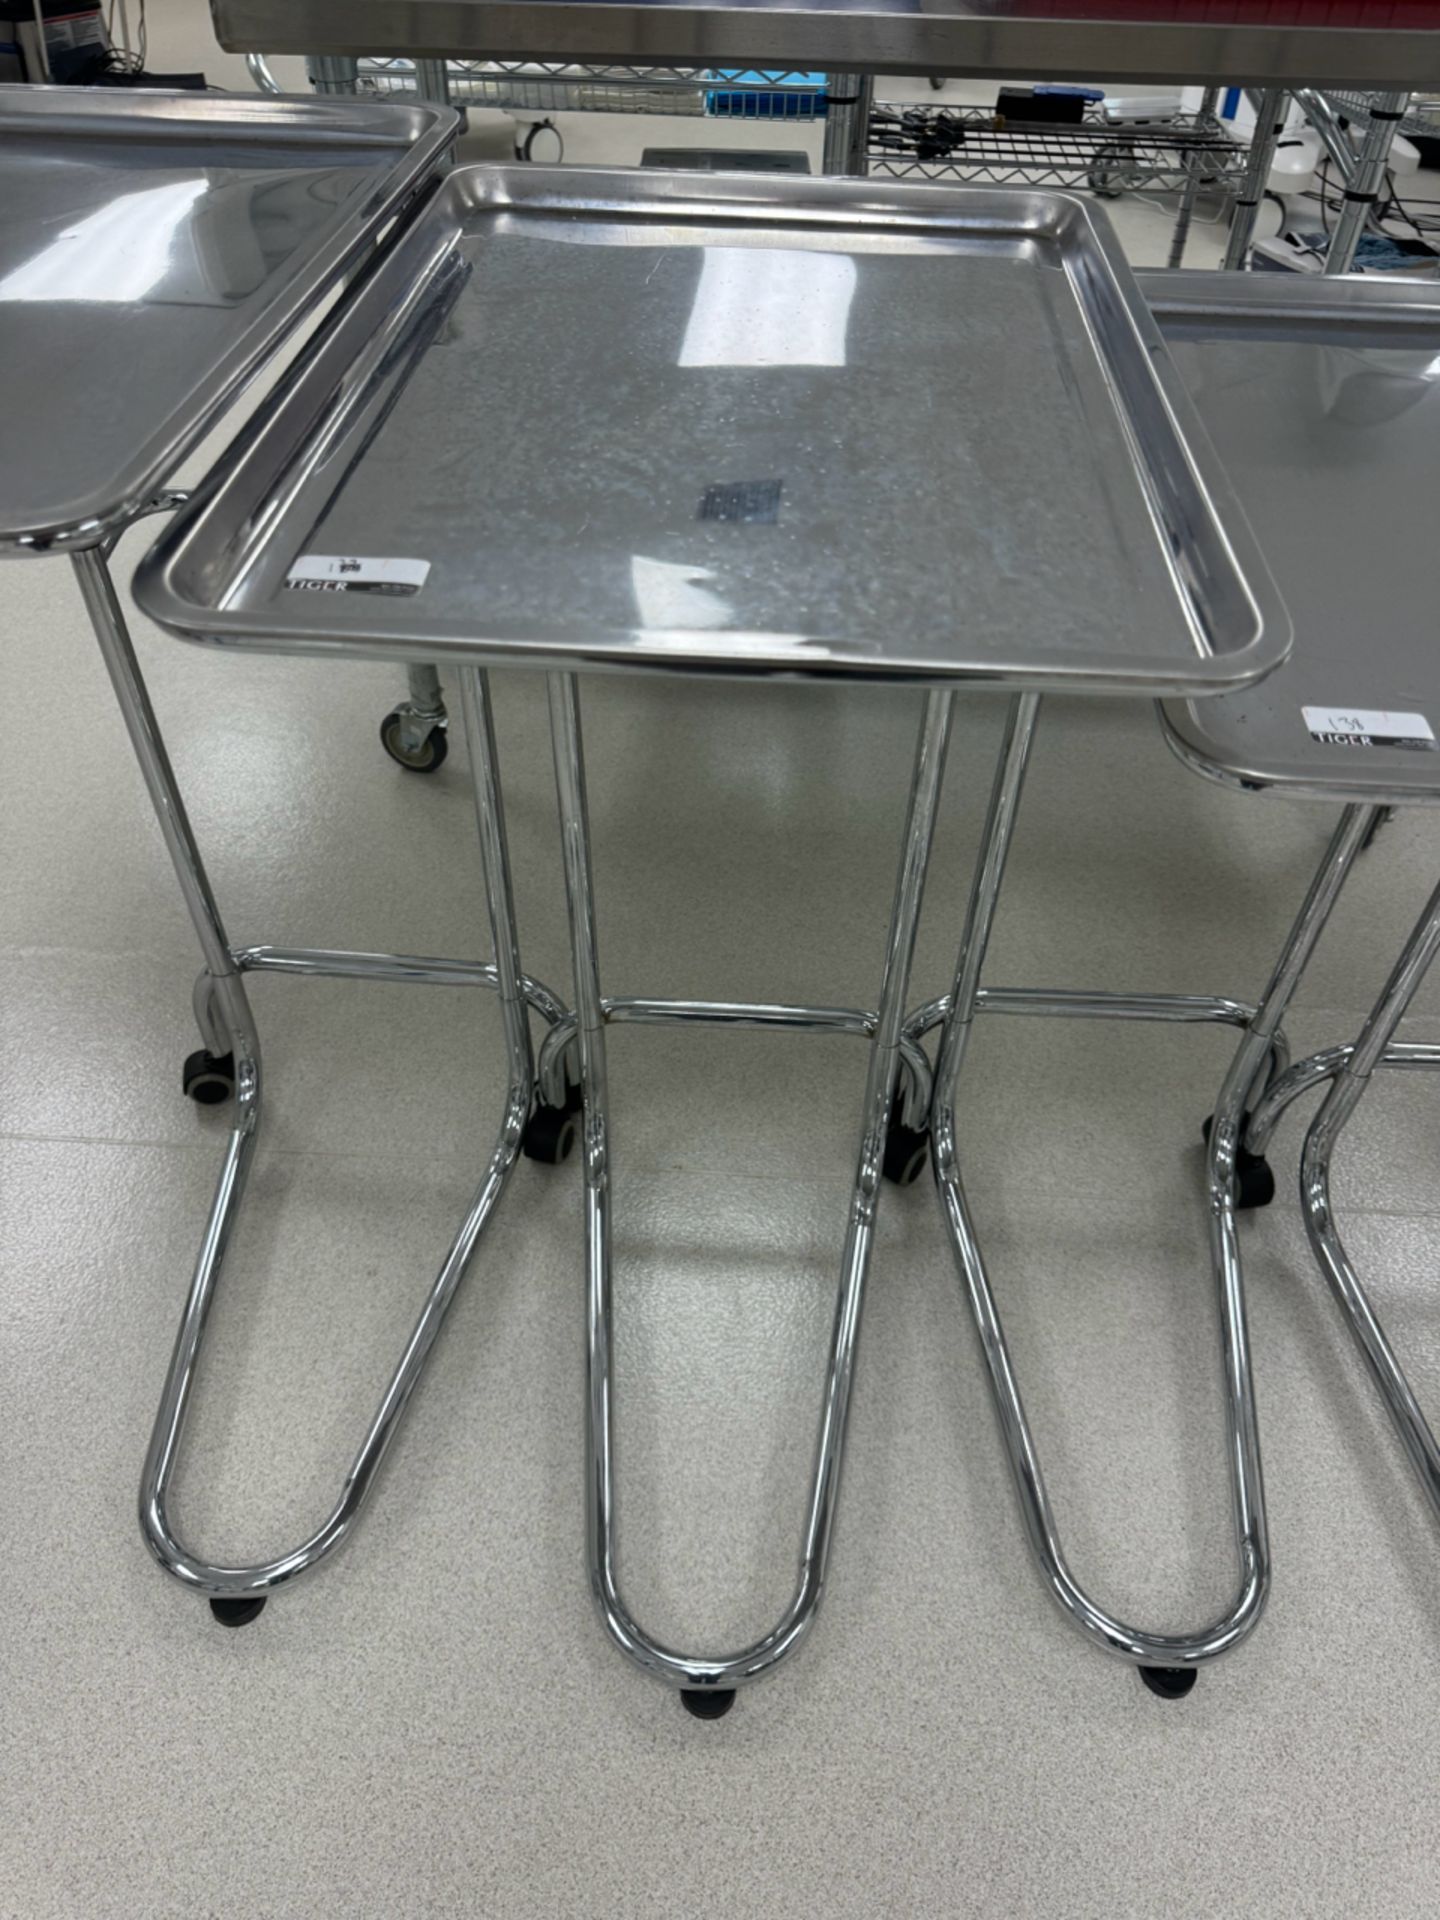 (4) Pedigo Foot Operated Stands & Mobile Utensil Cart - Image 3 of 6